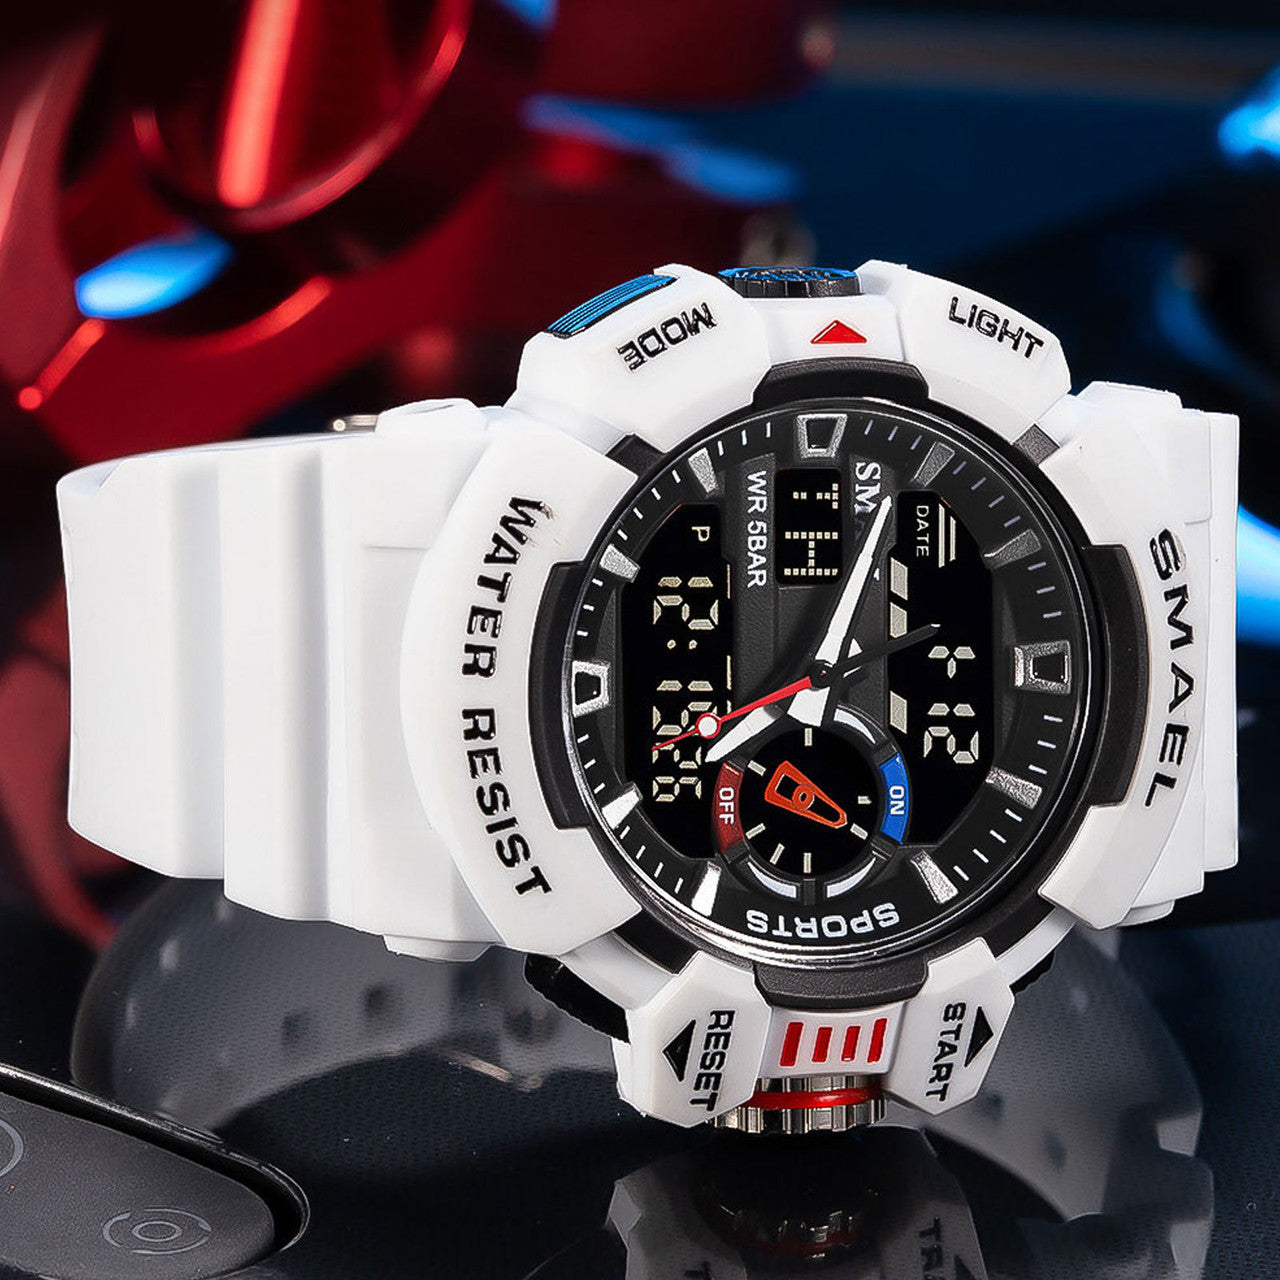 SMAEL Sport Watch Dual Time Men Quartz Watches Fashion LED Digital Wristwatches